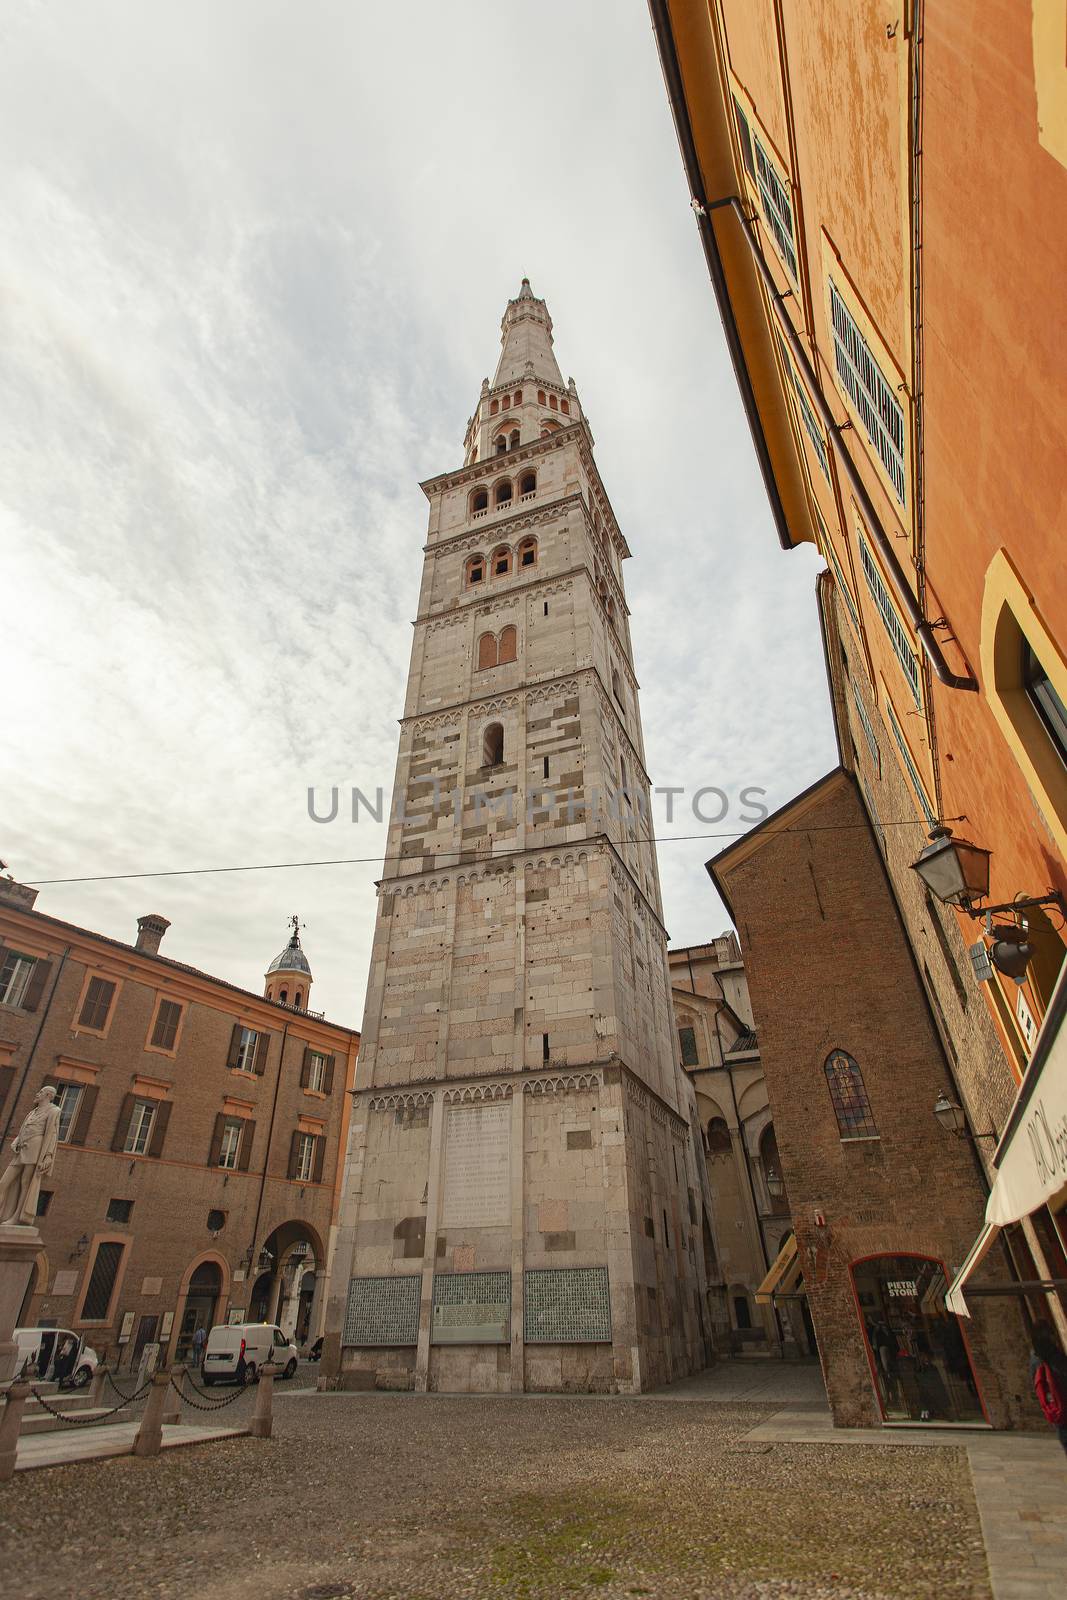 MODENA, ITALY 1 OCTOBER 2020: Ghirlandina tower detail in Modena